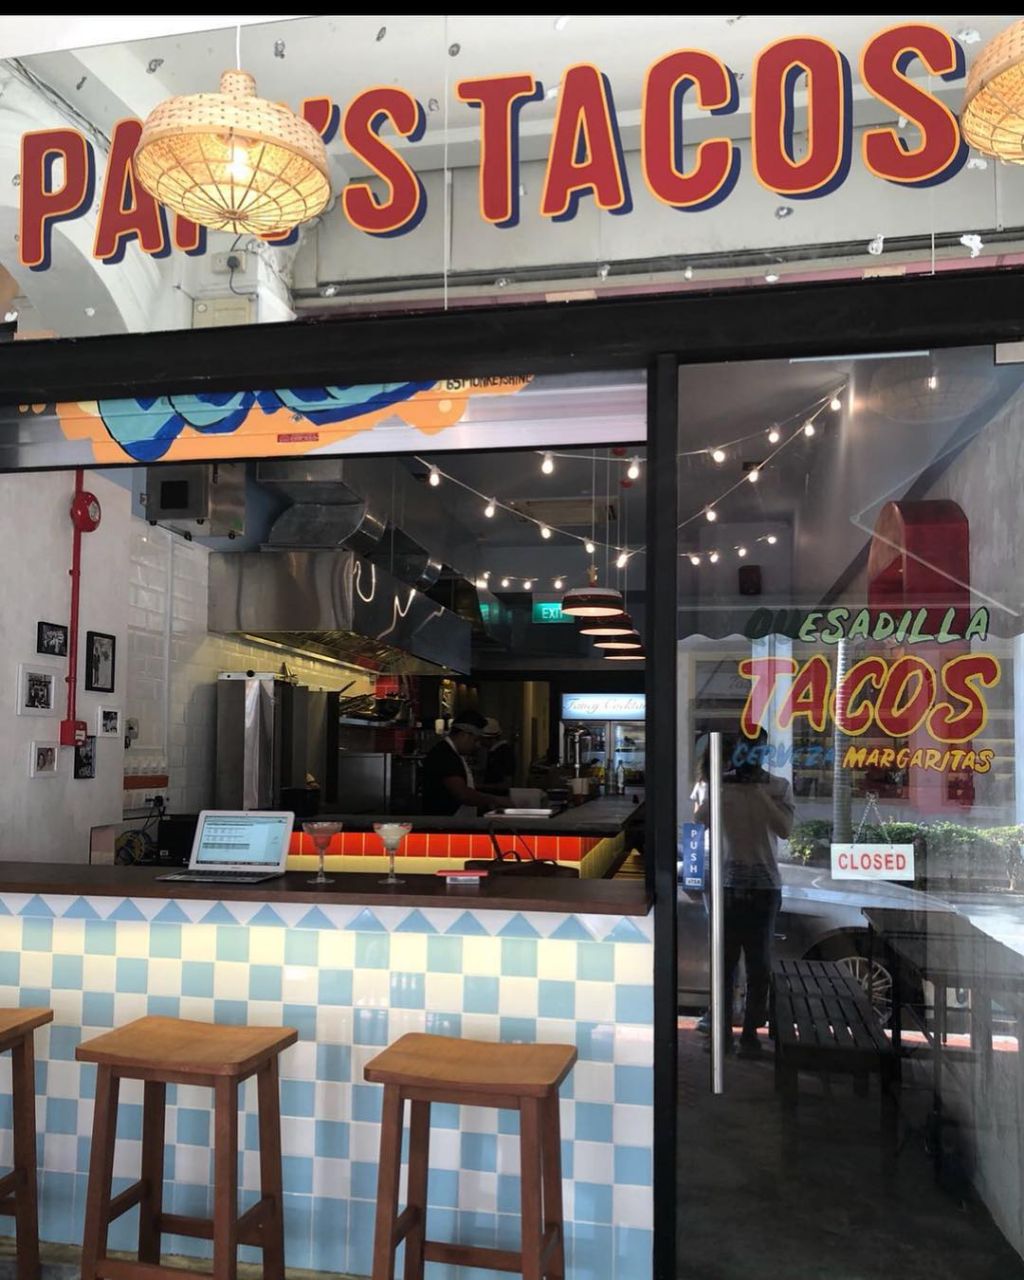 Papi's Tacos - Mexican street food